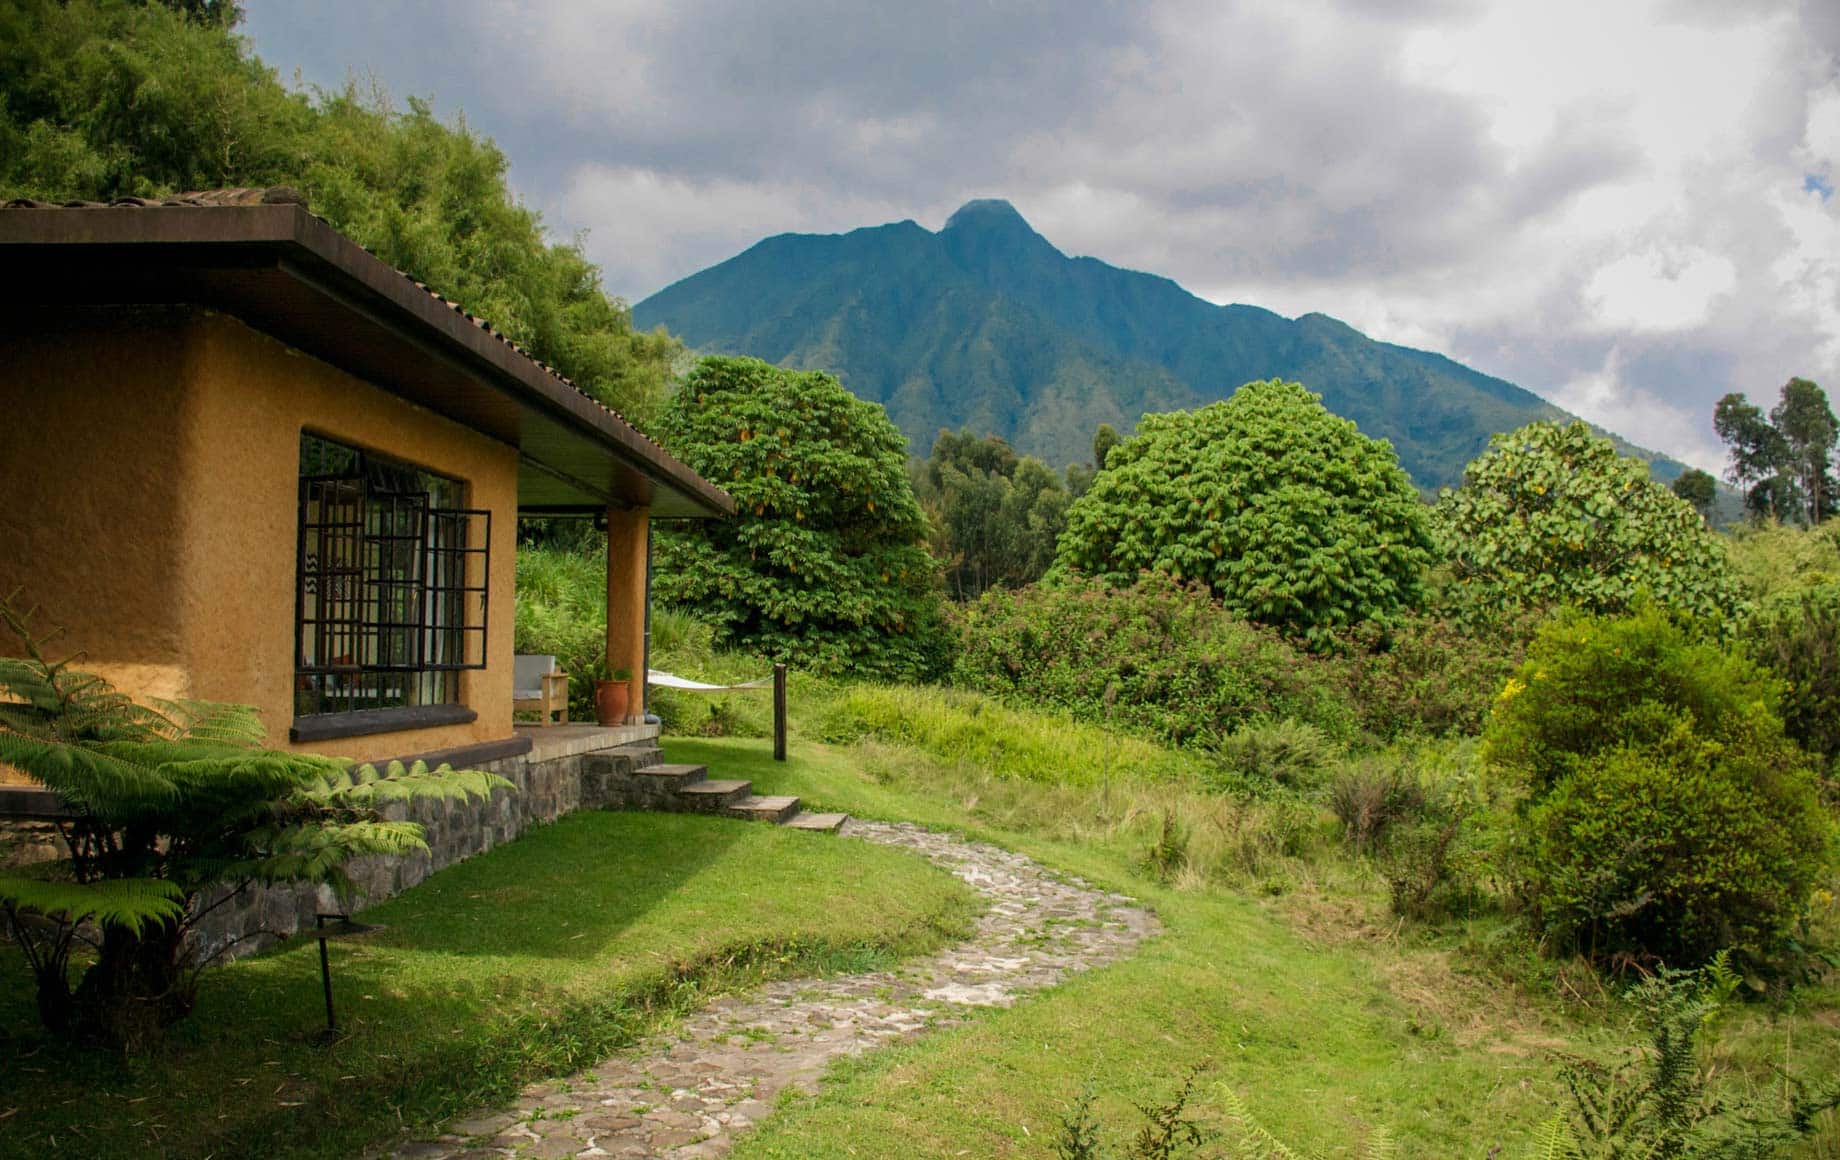 House and nature views at Parc Nacional des Volcans